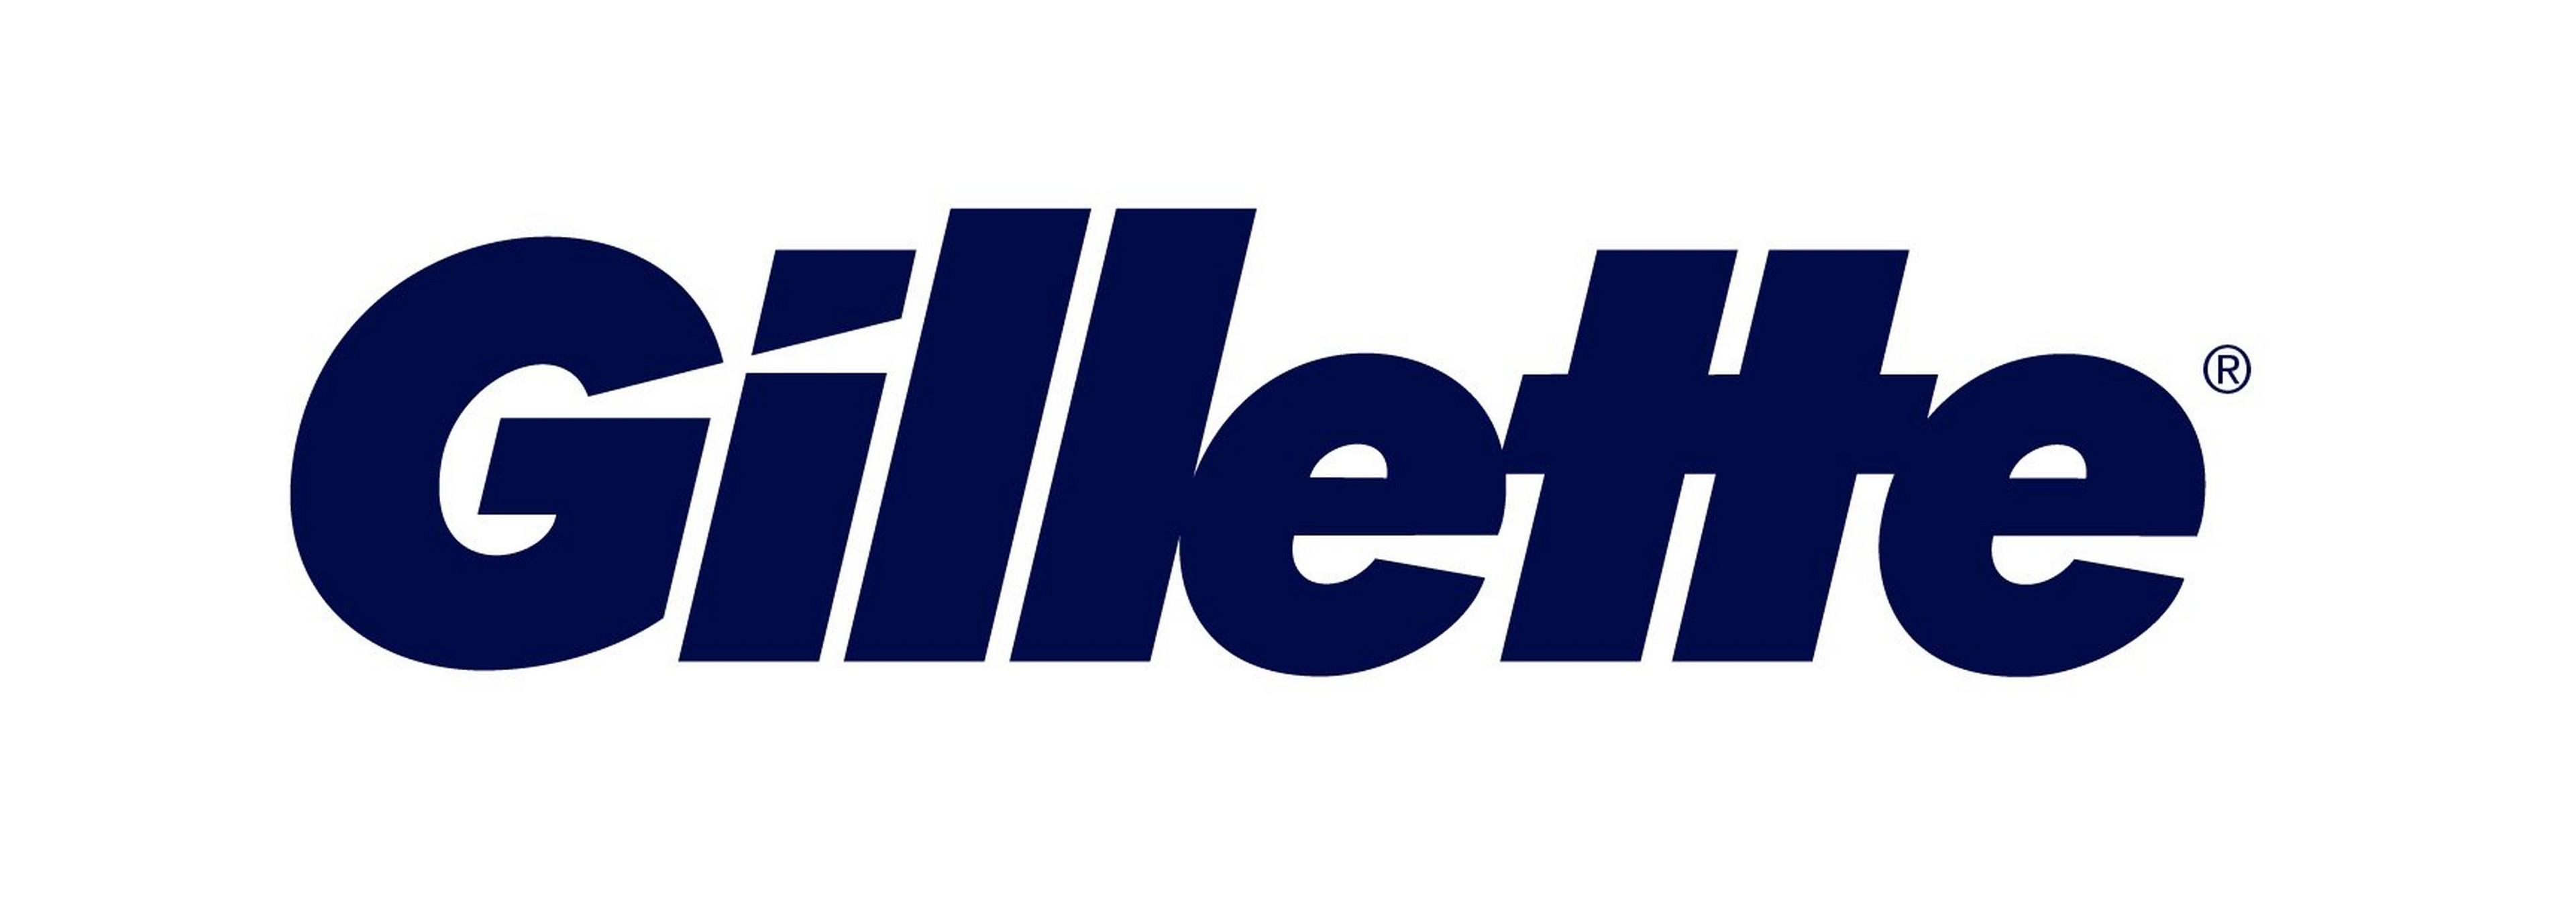 Gillette logotype